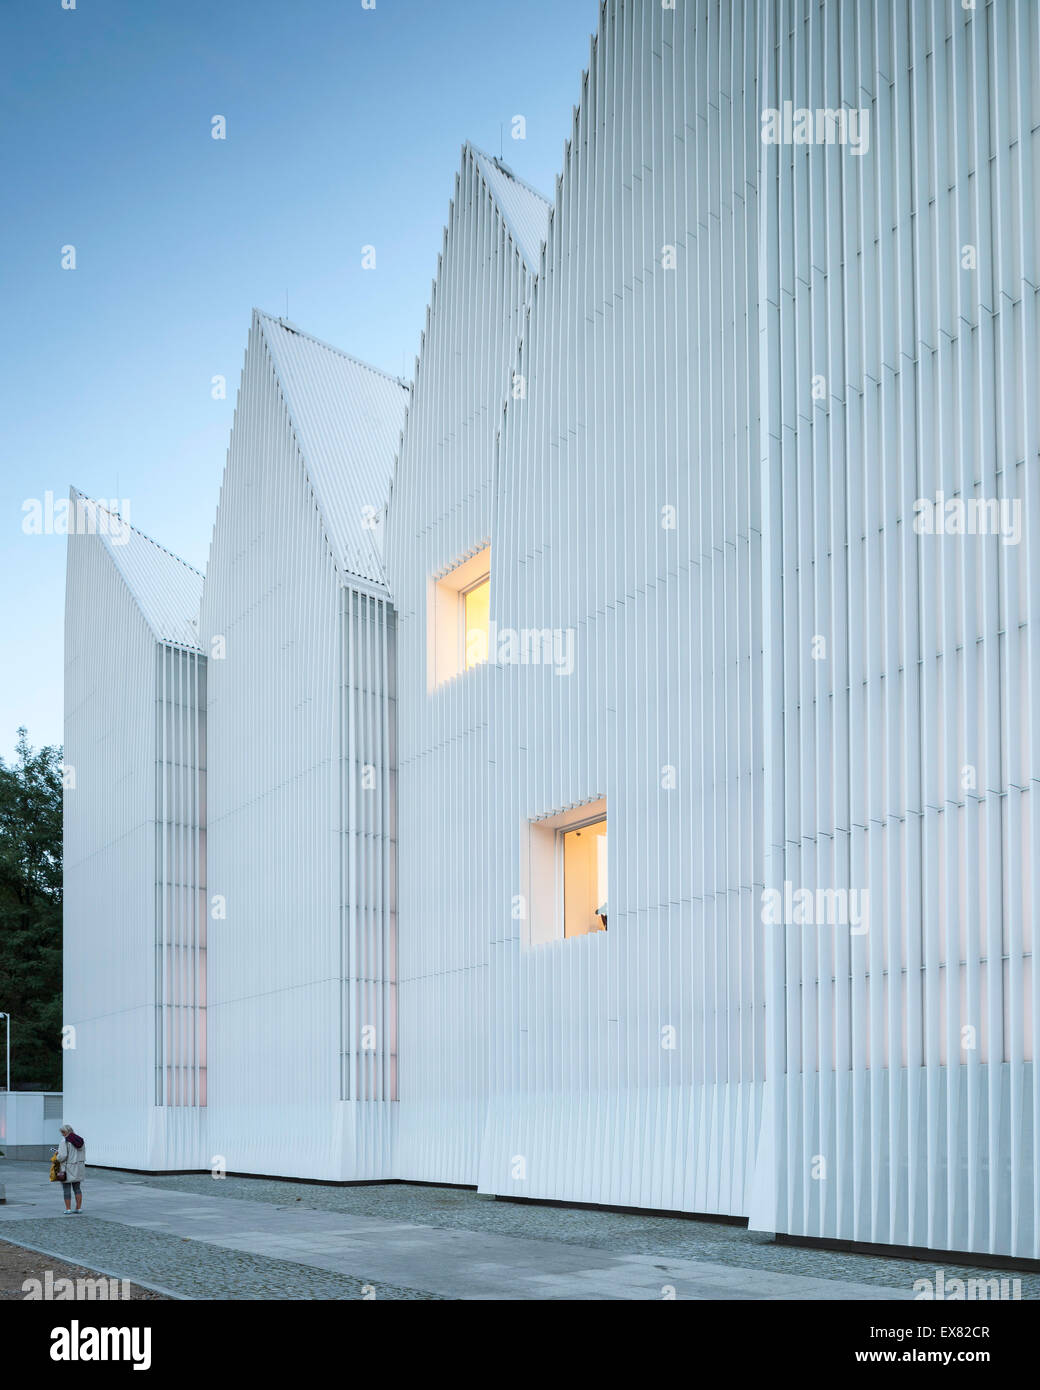 Dusk perspective of luminous exterior facade. Szczecin Philharmonic Hall, Szczecin, Poland. Architect: Estudio Barozzi Veiga, 20 Stock Photo